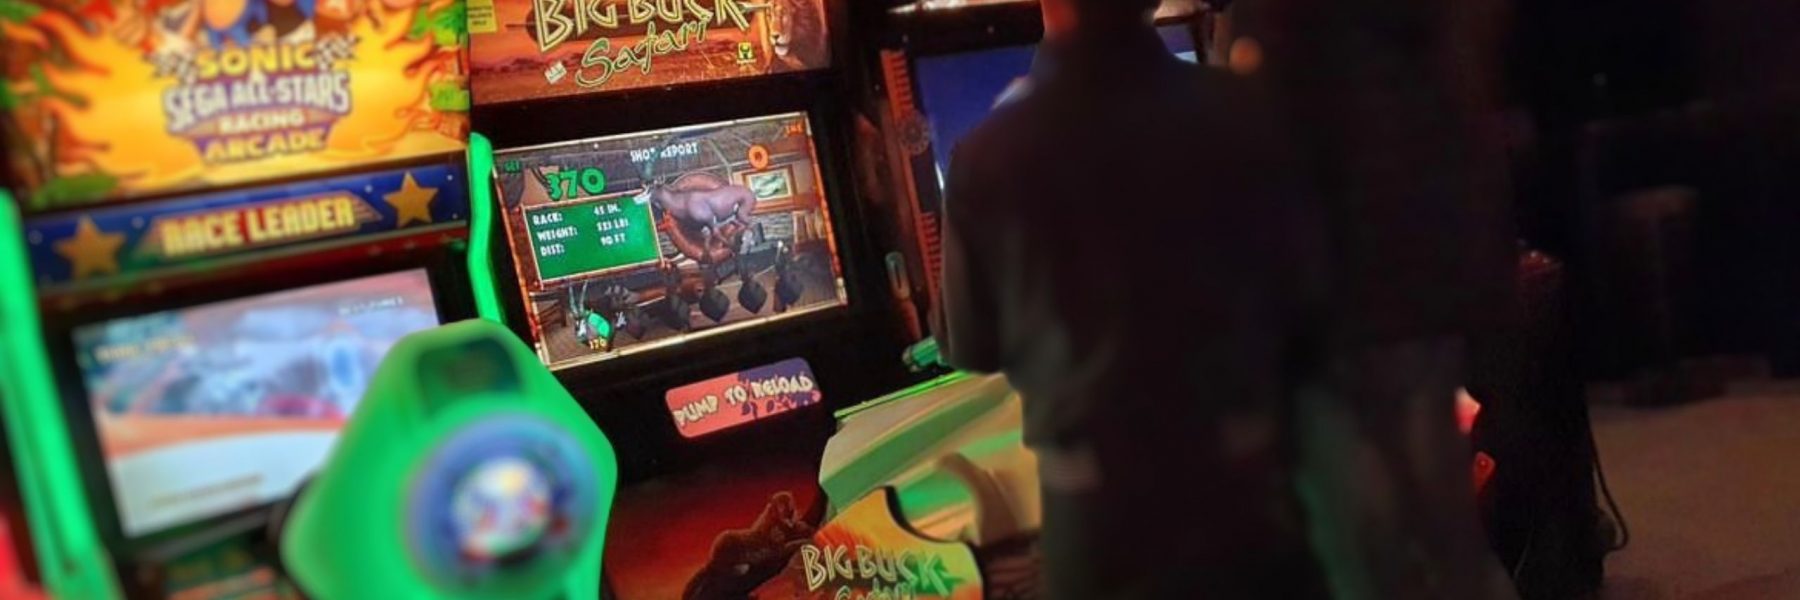 Big Buck Safari Arcade ArCains Liverpool